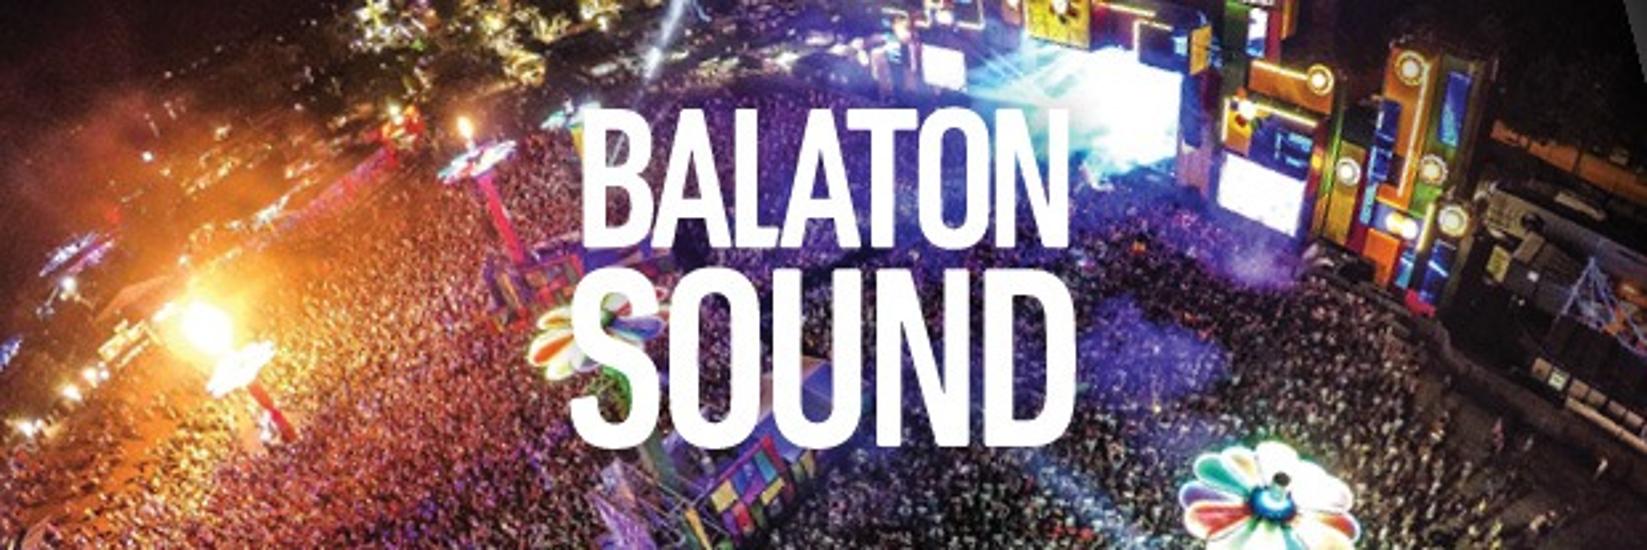 5 Reasons To Be At Balaton Sound 2016